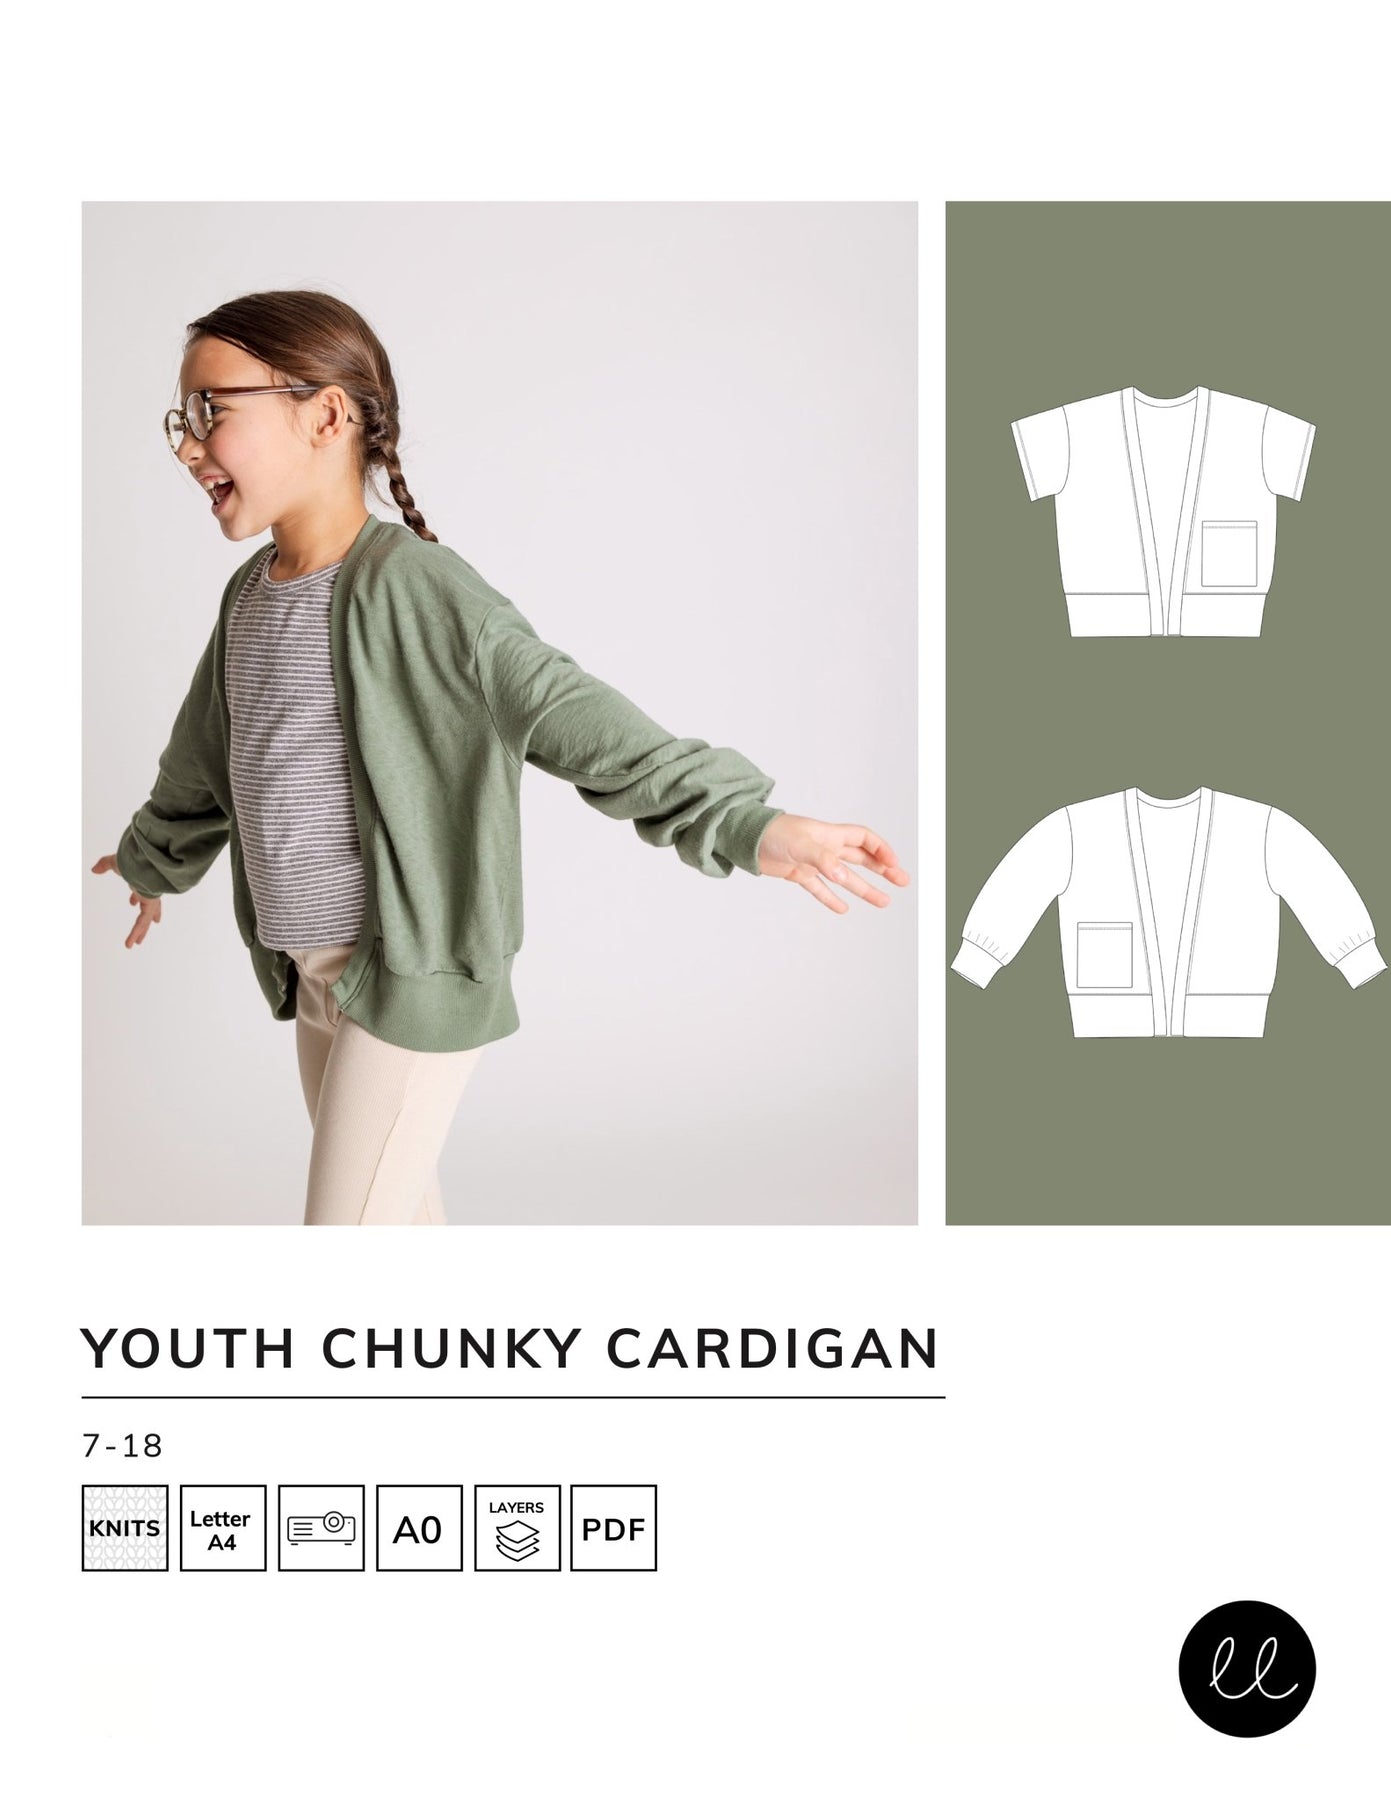 Cardigan Youth Chunky